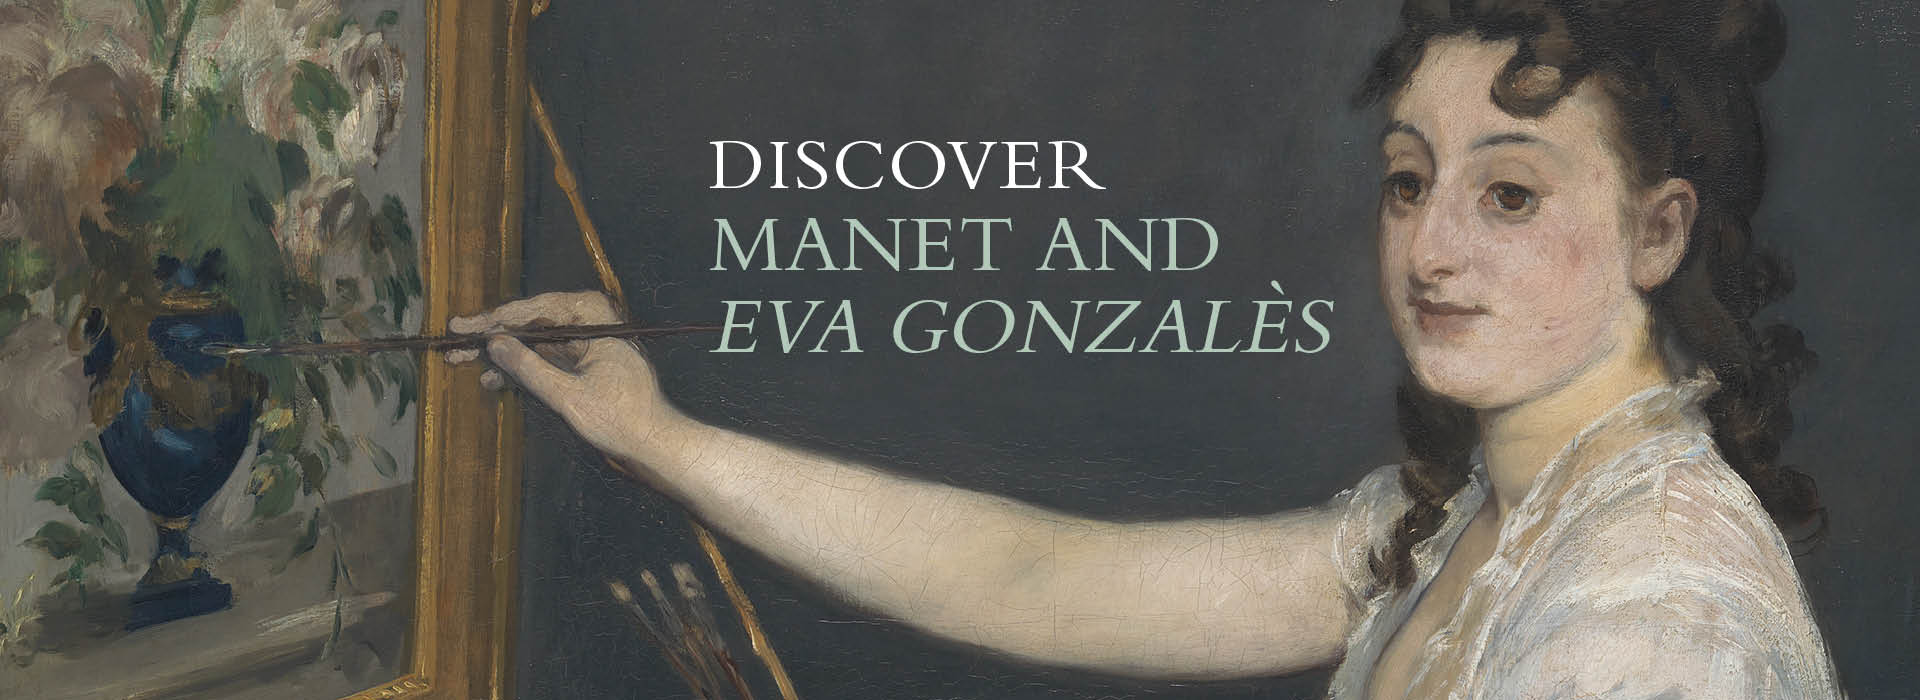 Portretul Evei Gonzalès realizat de Édouard Manet – expus la National Gallery